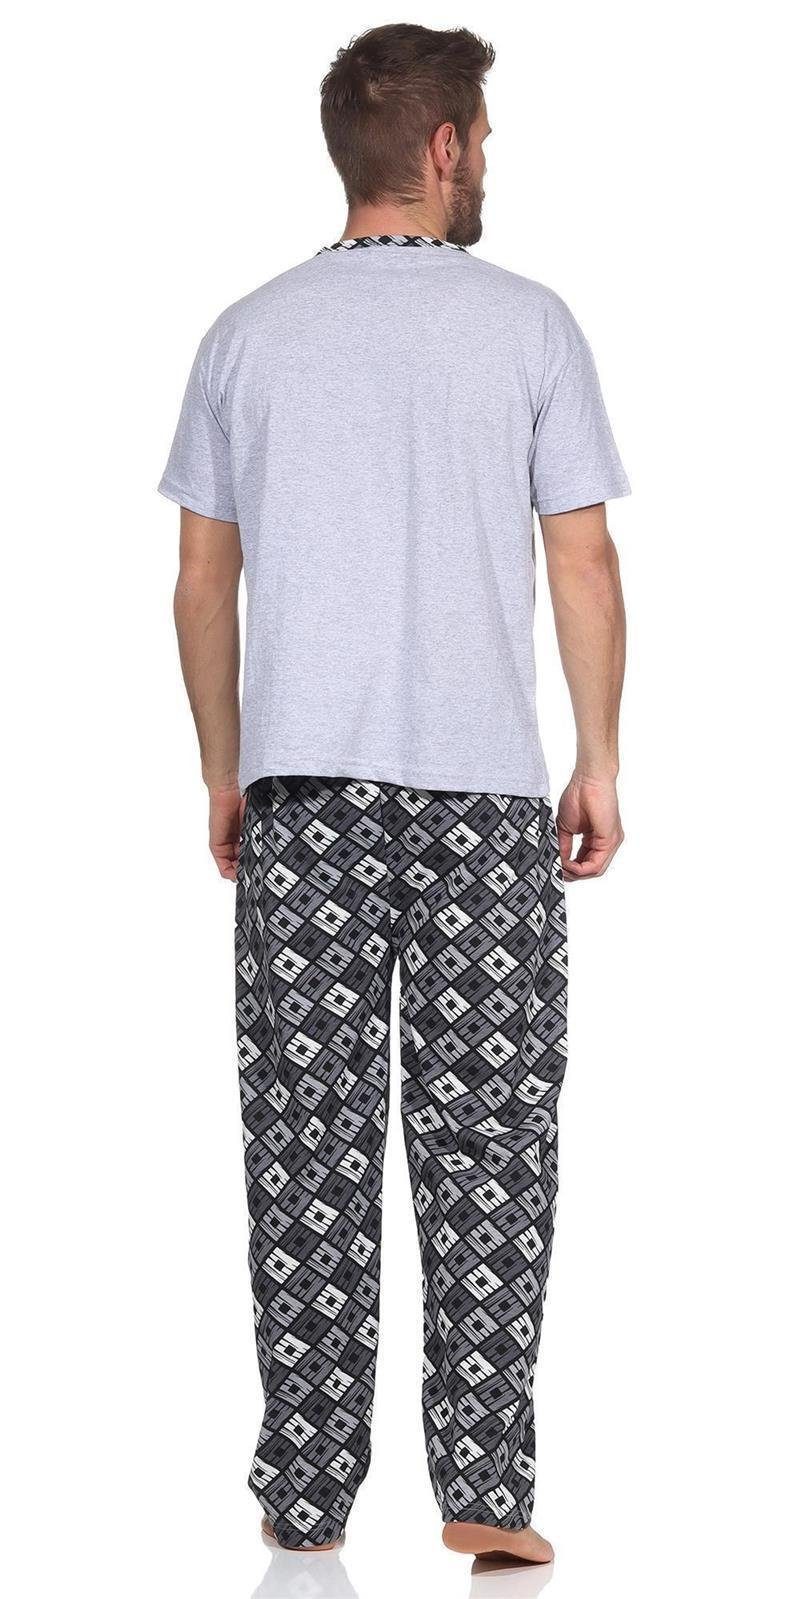 EloModa Pyjama Herren Pyjama Baumwolle Schlafhose und Shirt kurz-arm  Schlafanzug; M (2 tlg)